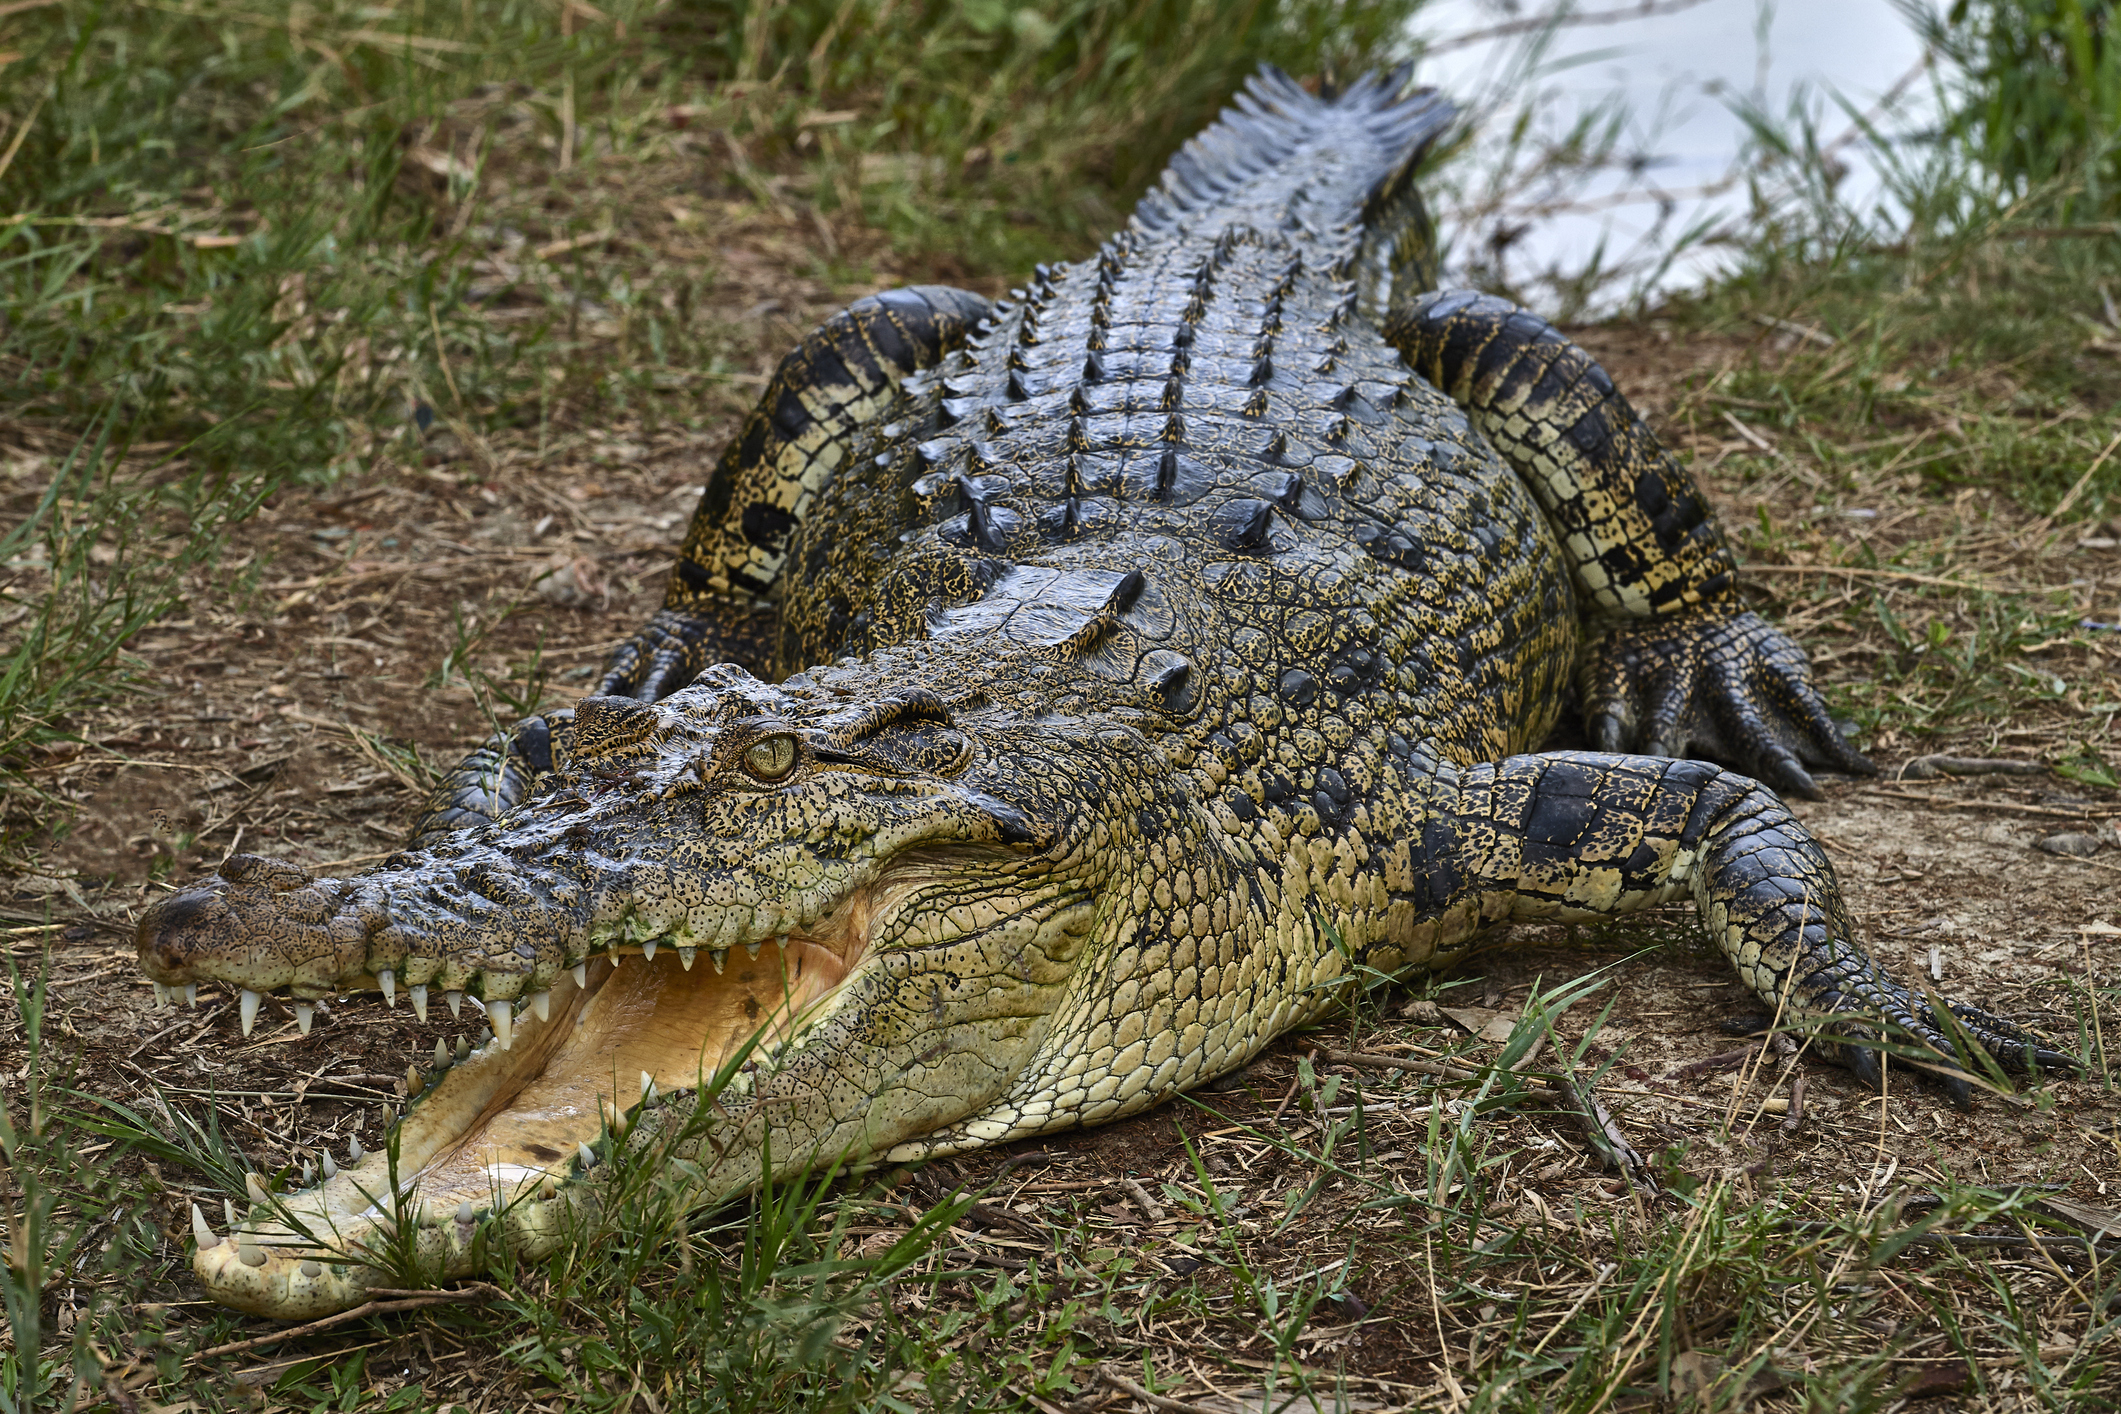 A crocodile in The Sundarbans, Bangladesh